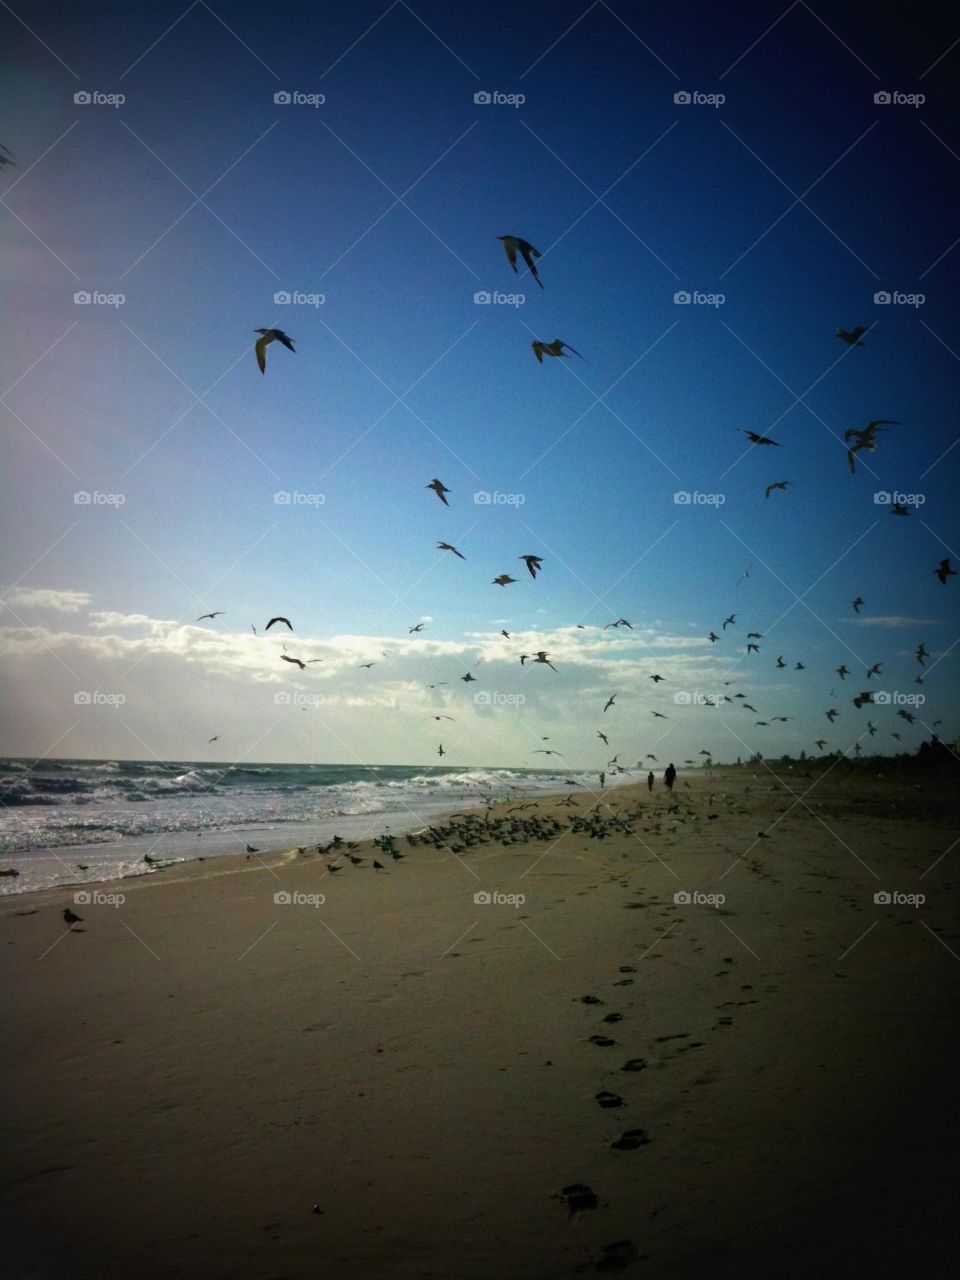 Birds flying near the ocean...